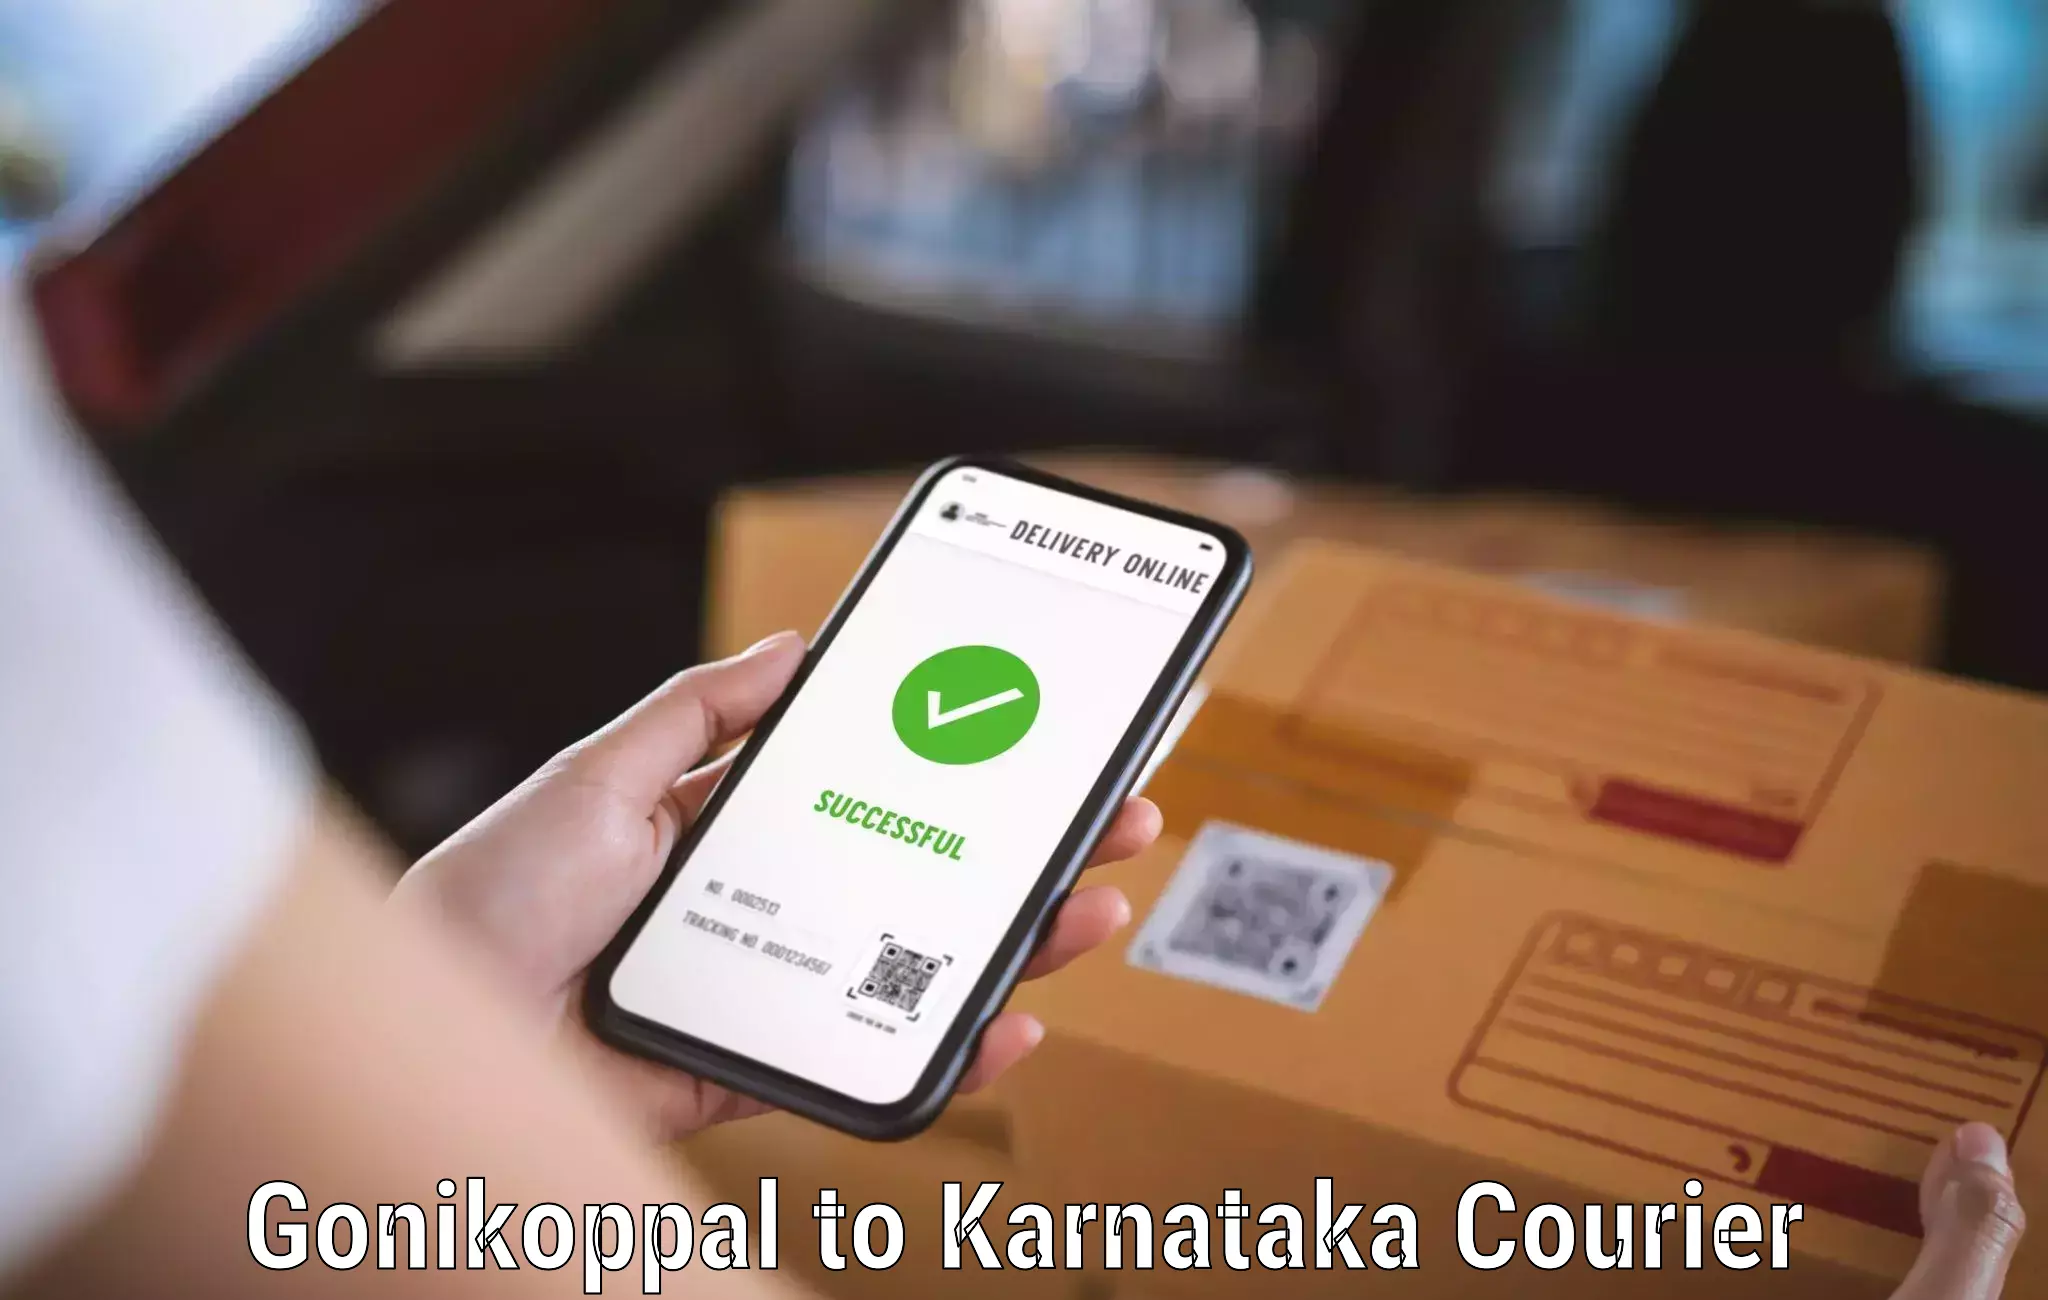 Courier service comparison Gonikoppal to Kalaburagi